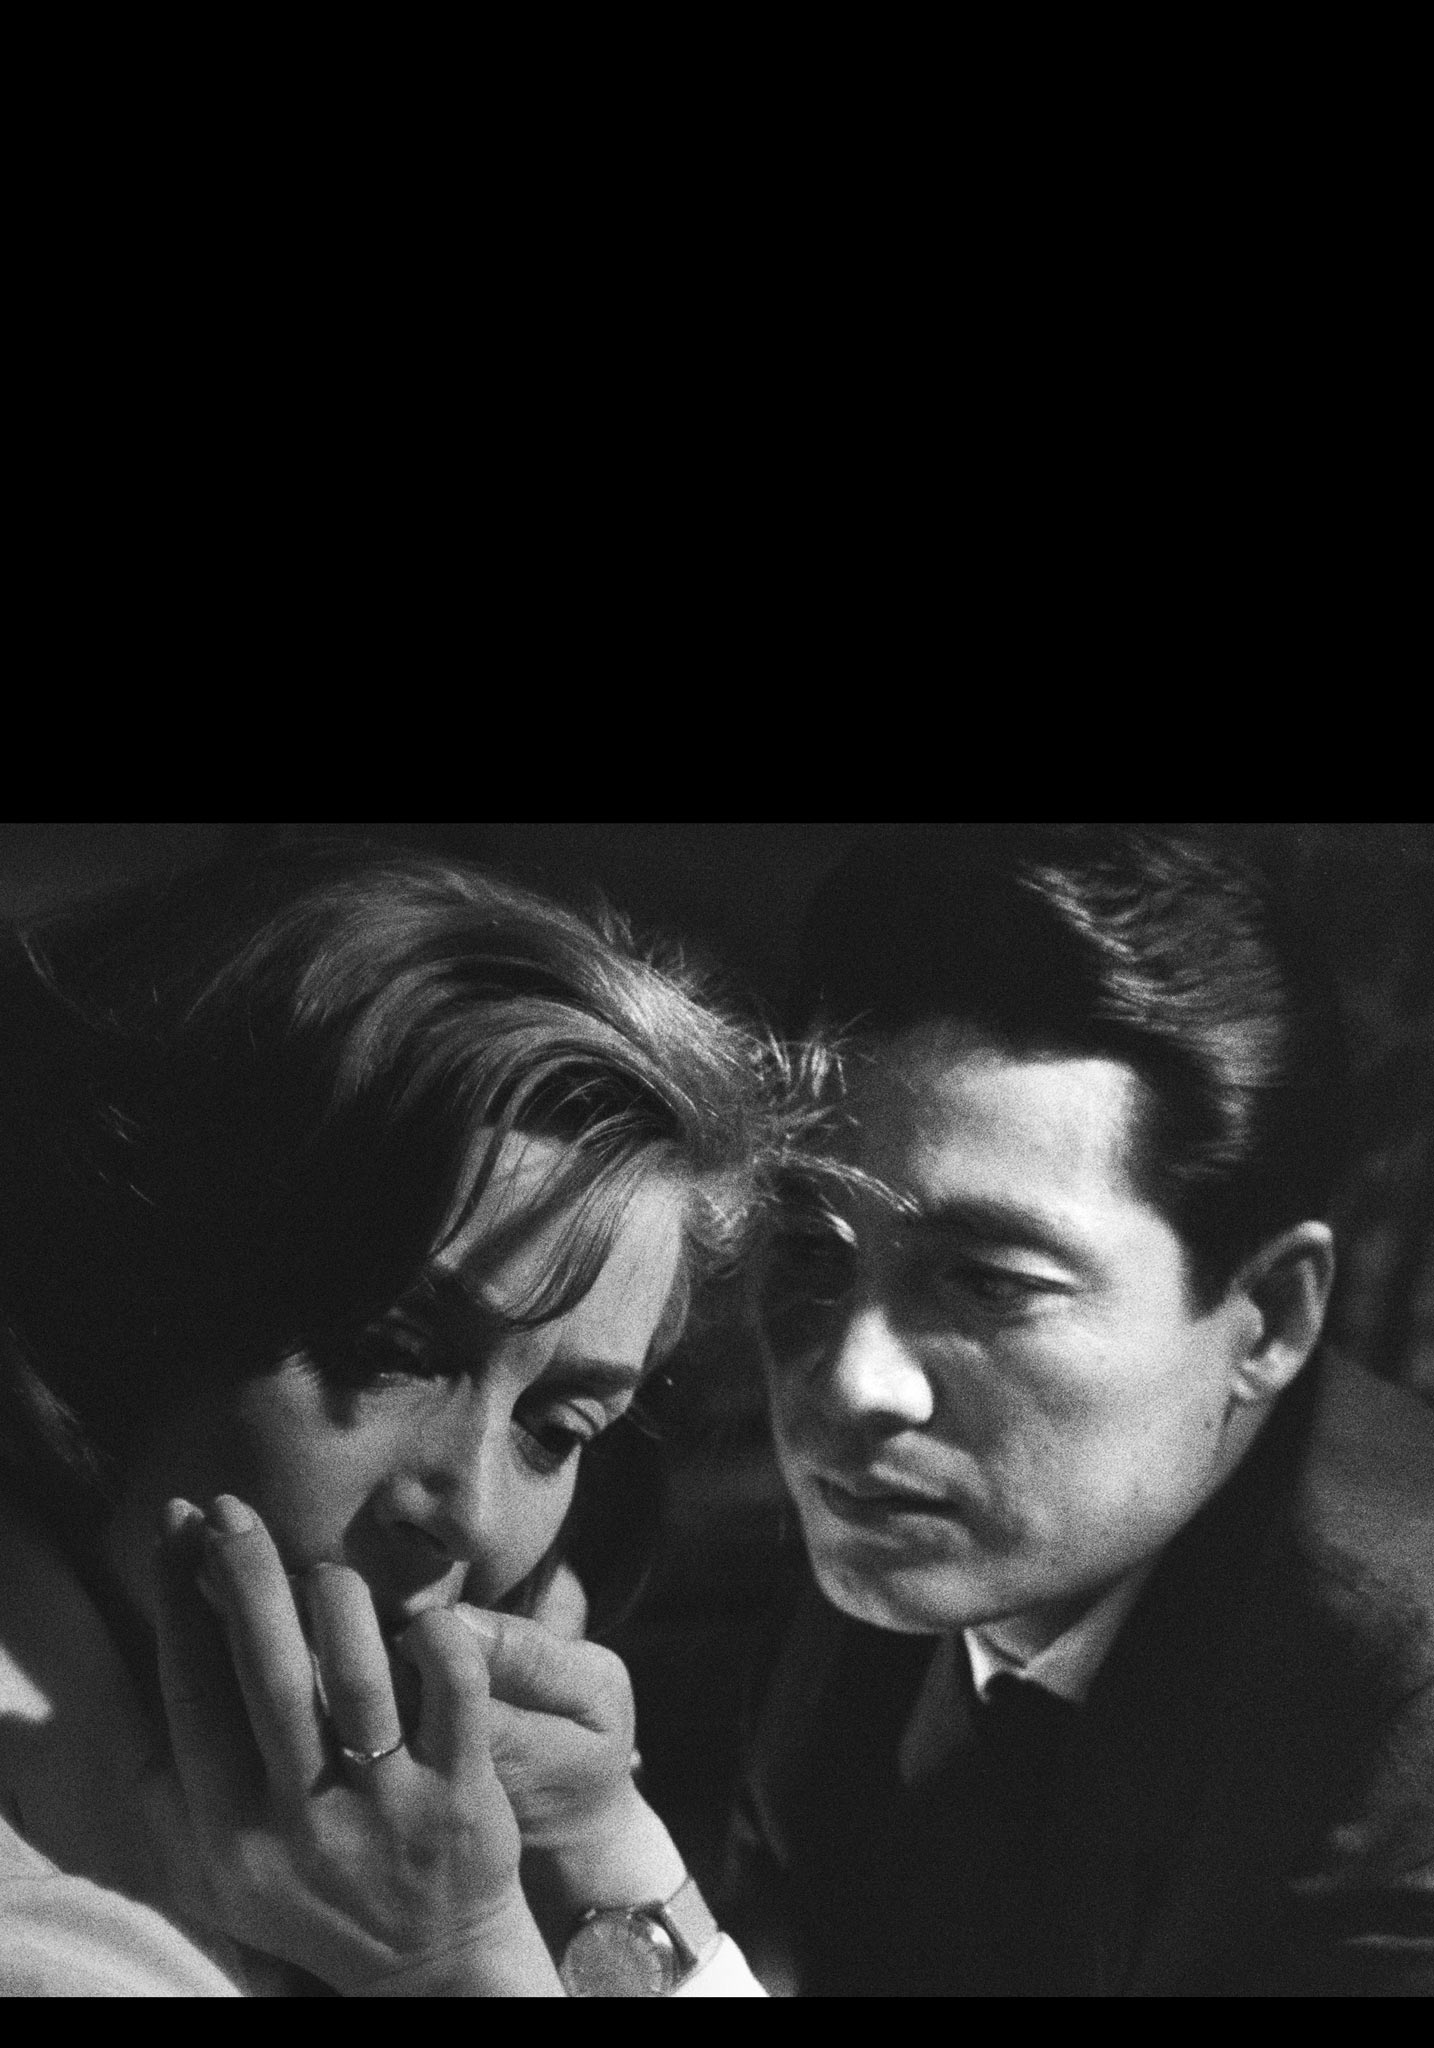 Hiroshima mon amour (1959) before full